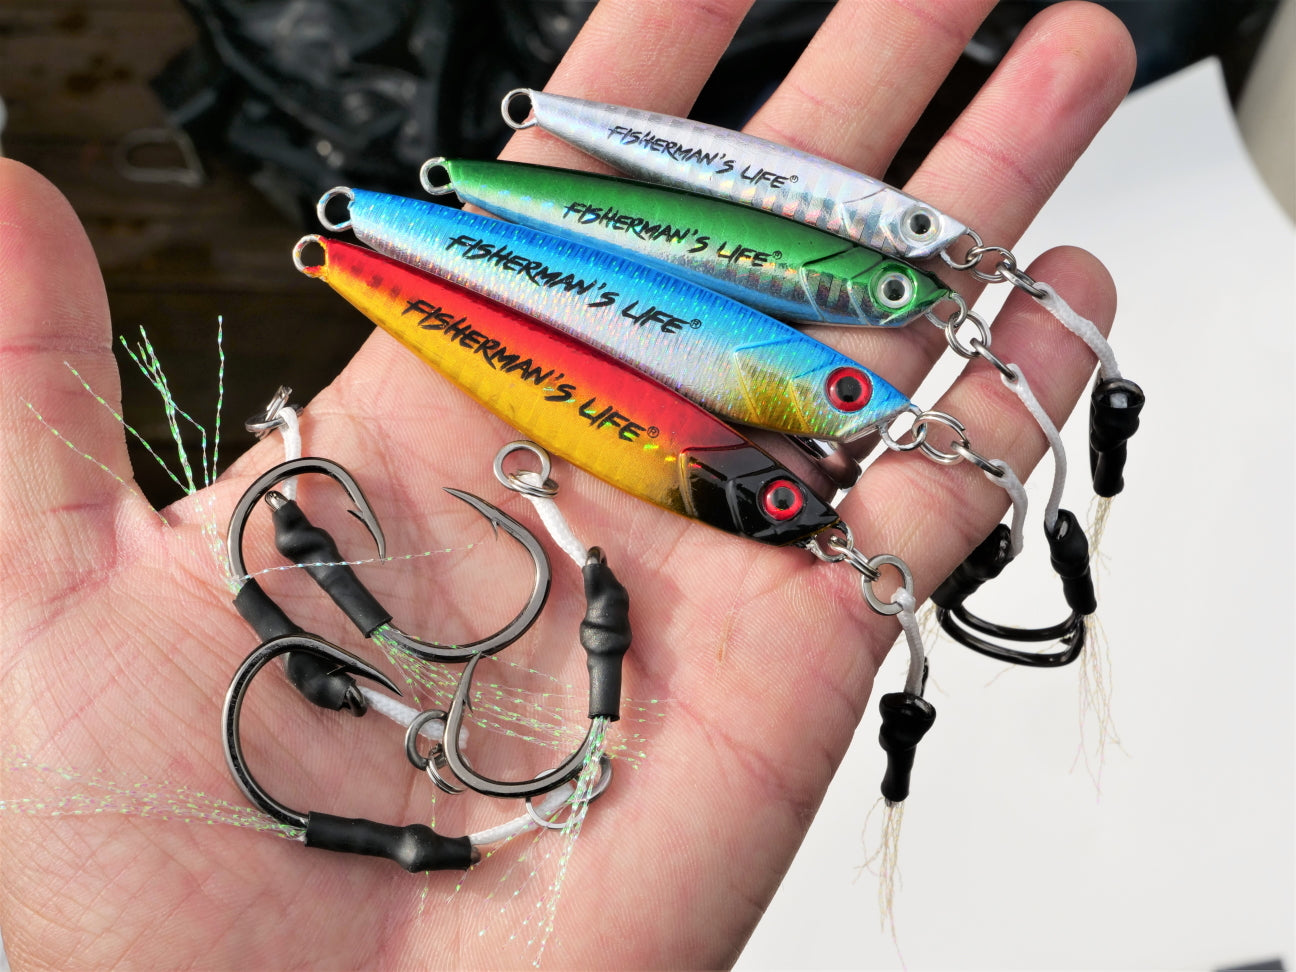 Hook Up Baits Custom XL 6 Soft Fishing Jig (Color: Red Crab / 2oz